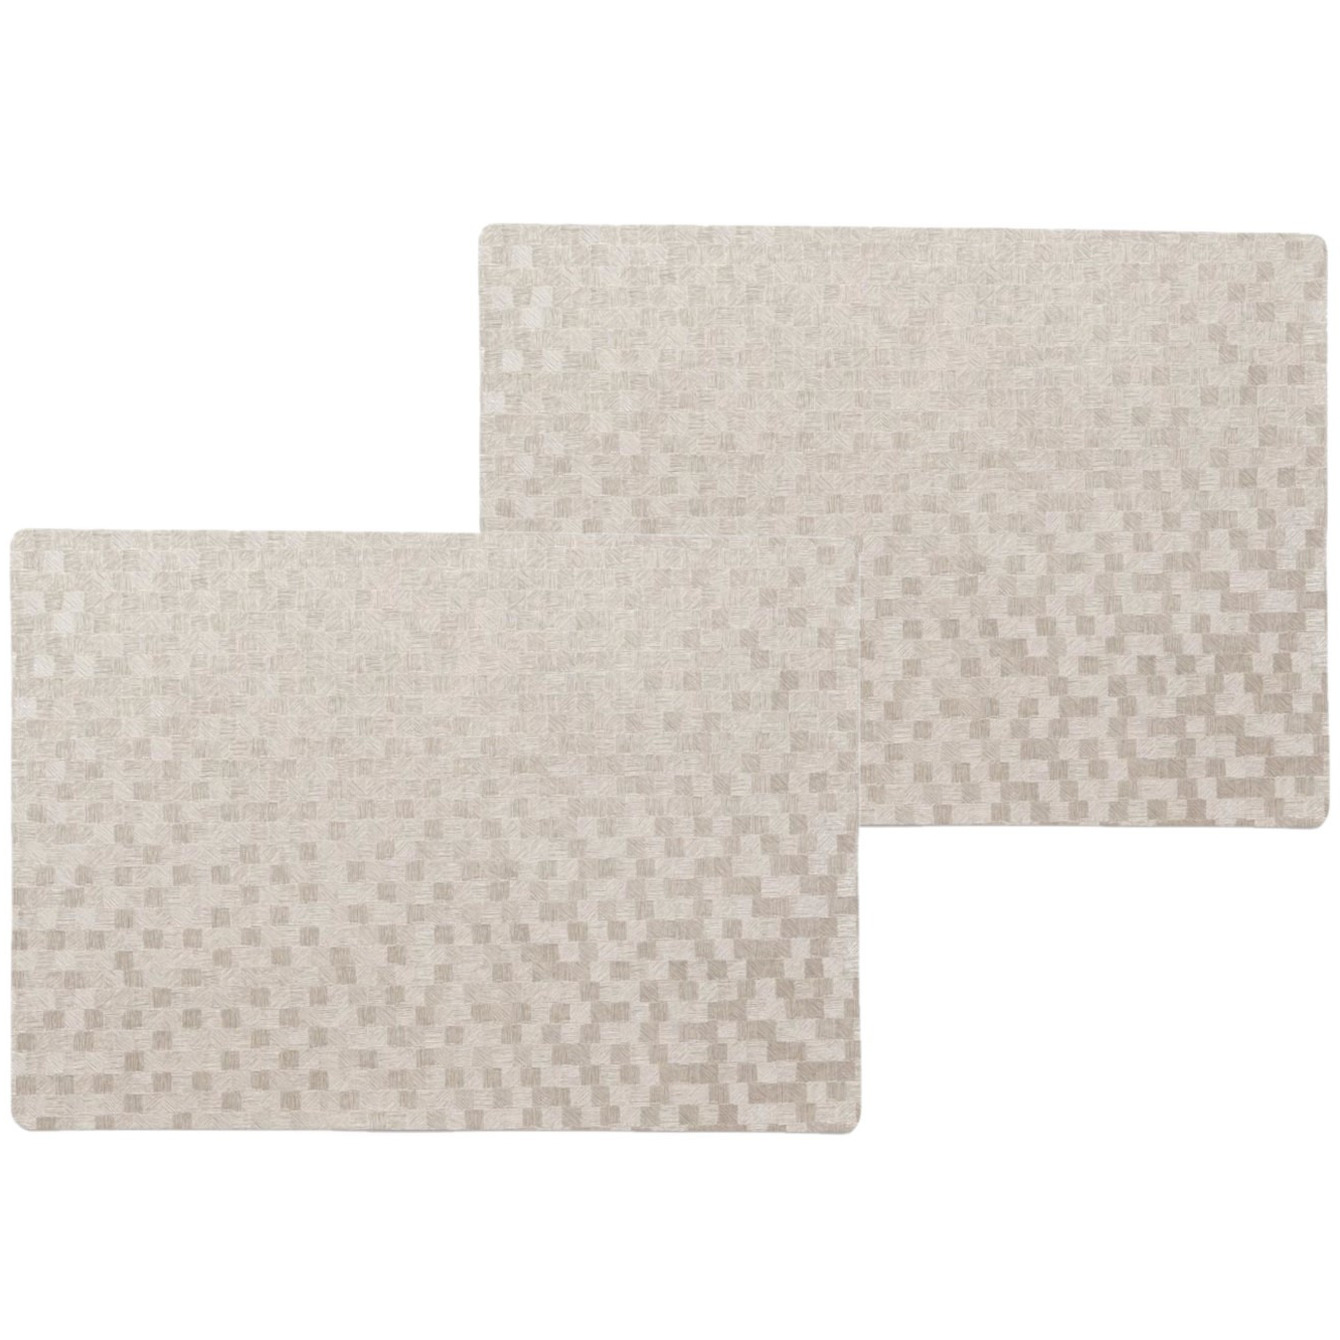 Wicotex 10x stuks stevige luxe Tafel placemats Stones taupe 30 x 43 cm -